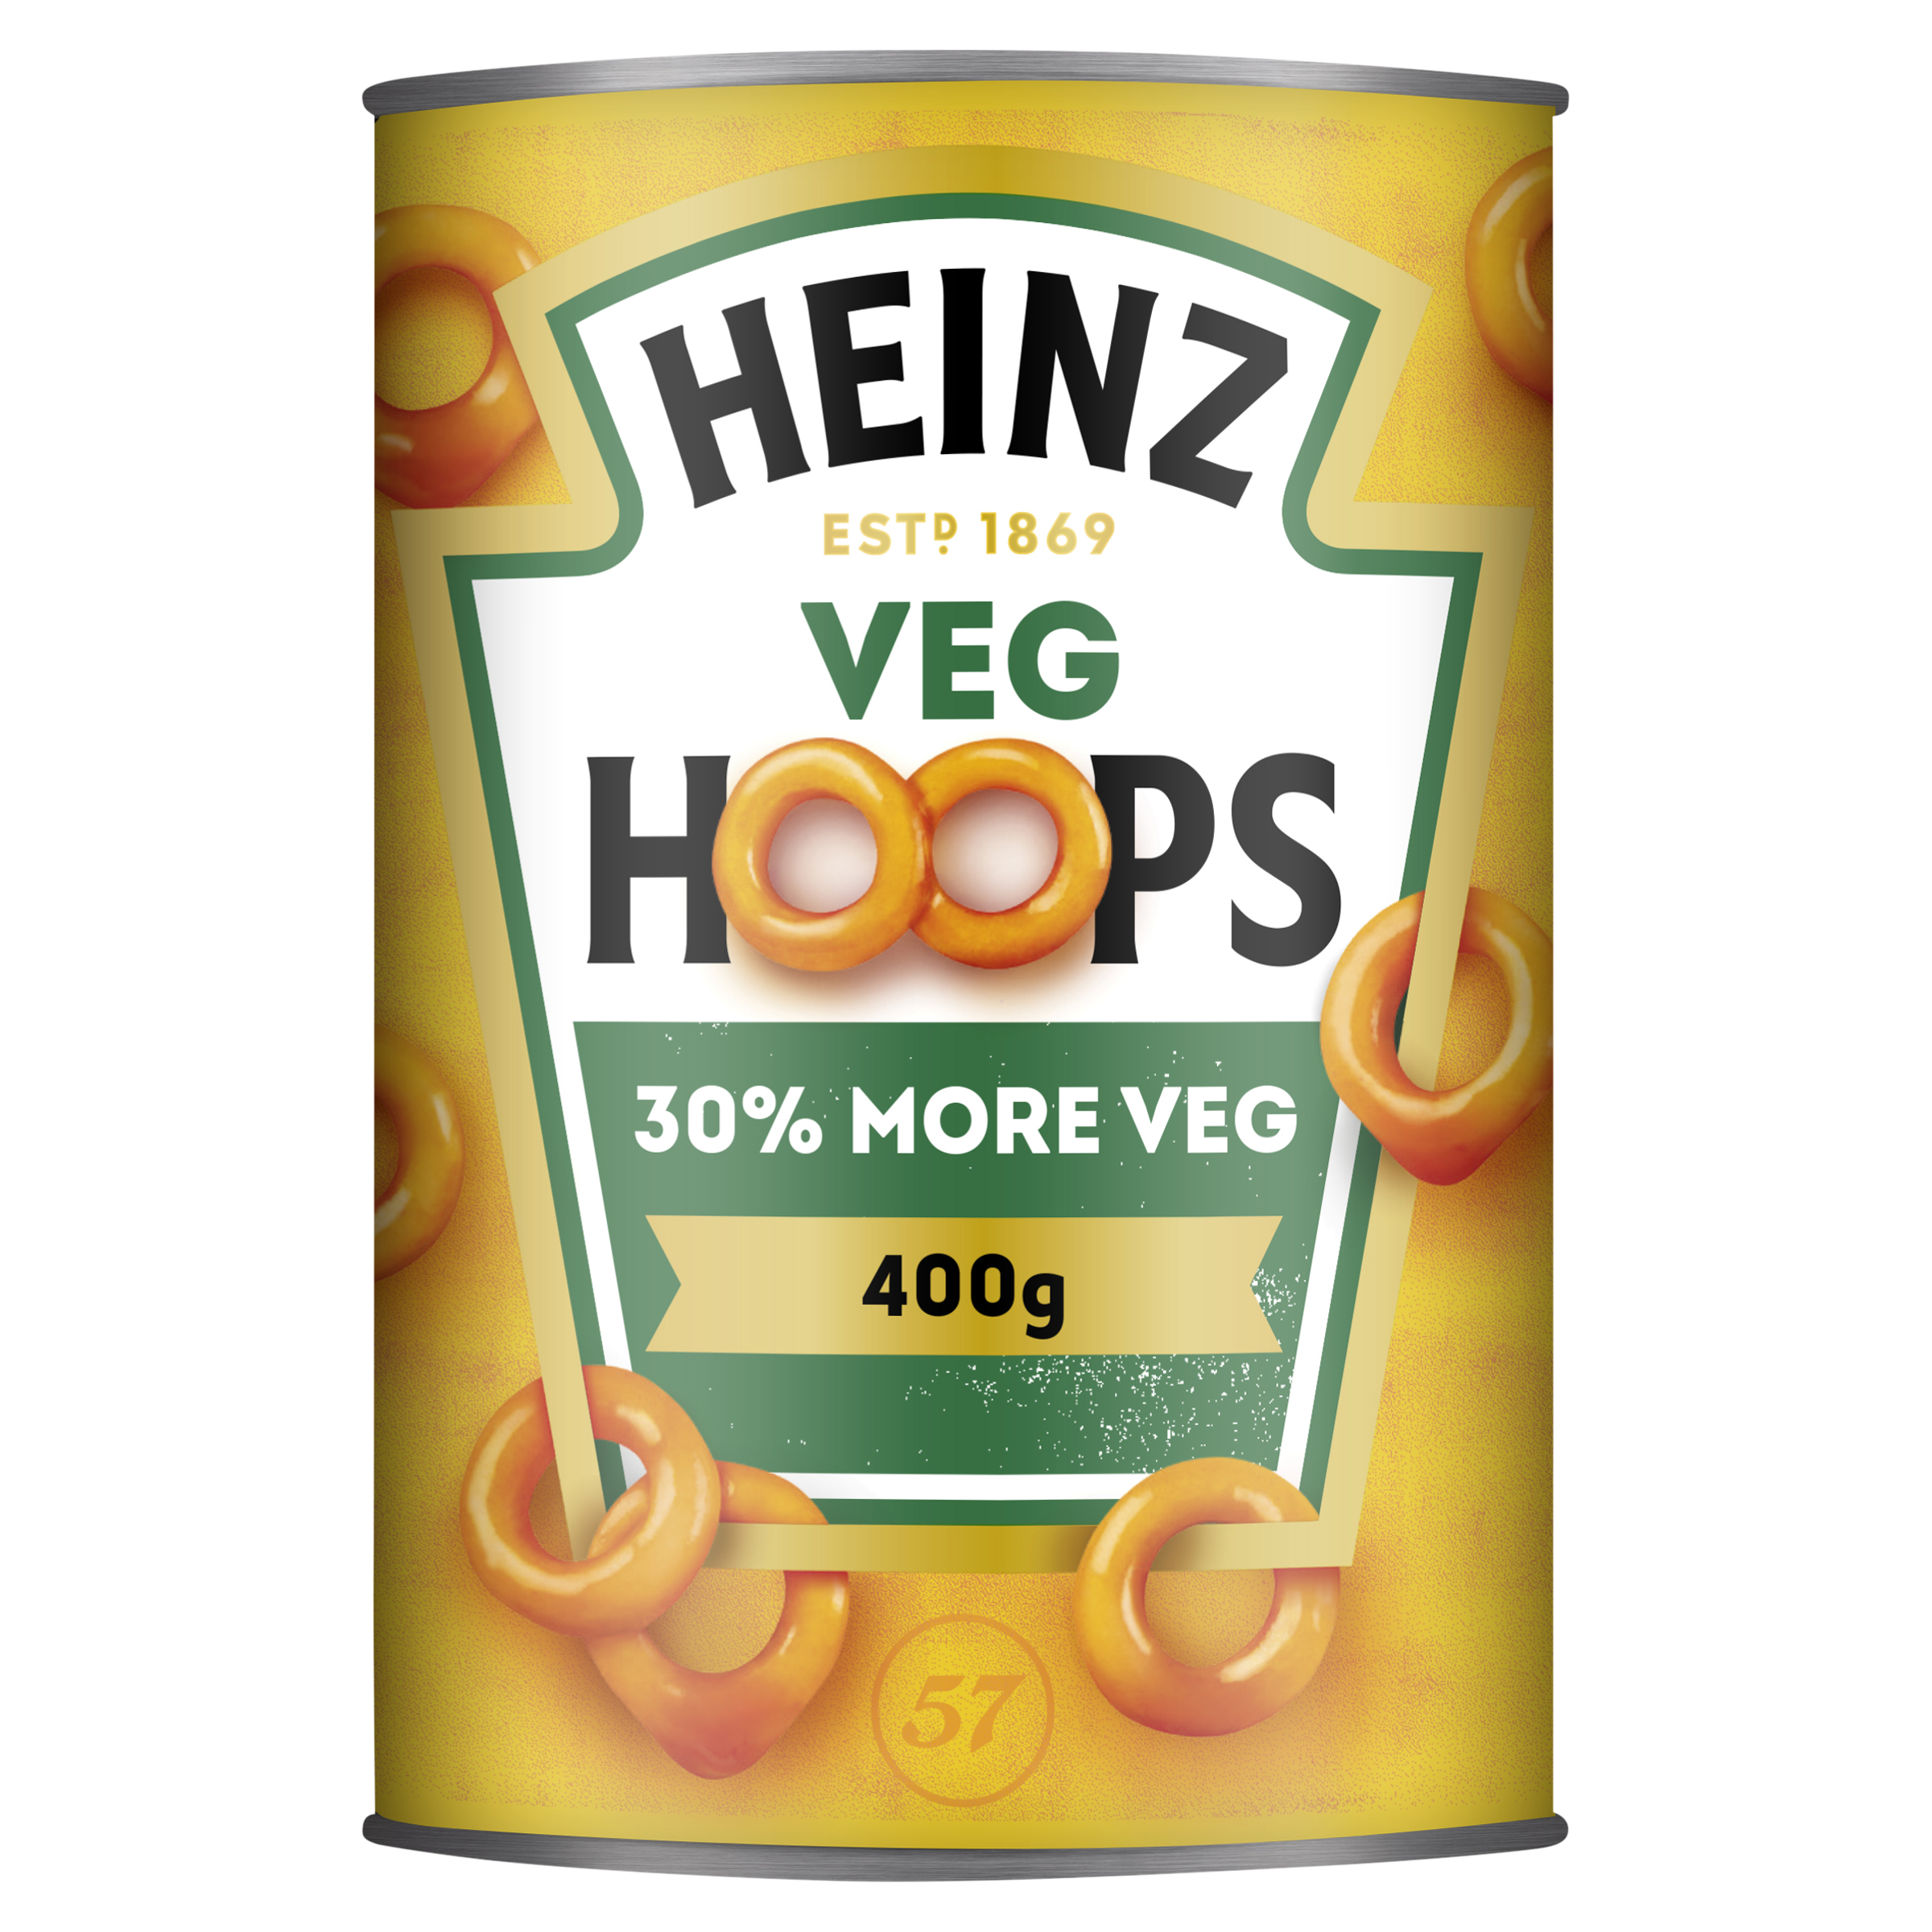 Photograph of Heinz Veg Hoops 400g product